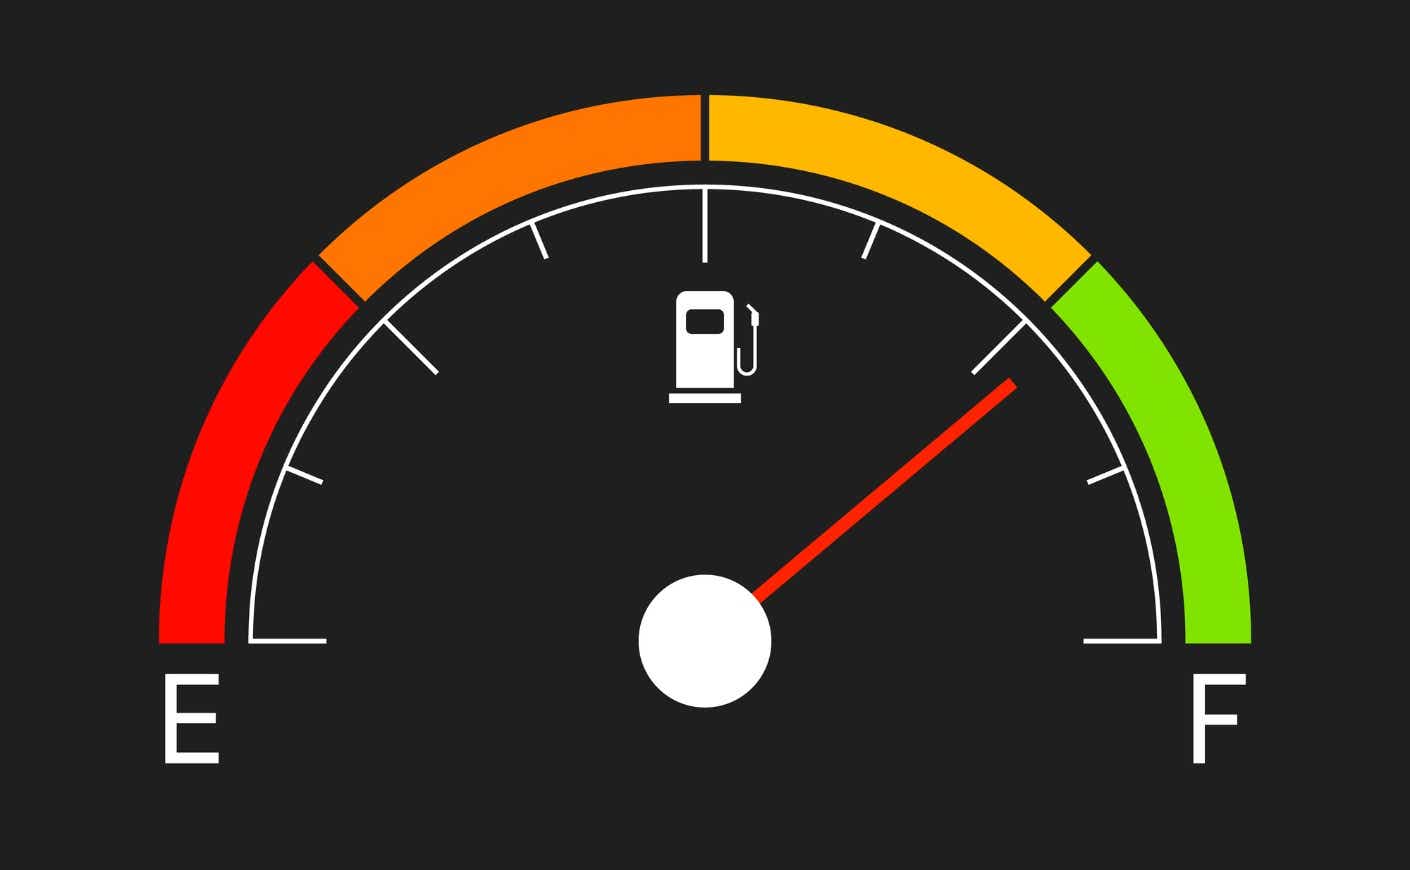 A full fuel gauge